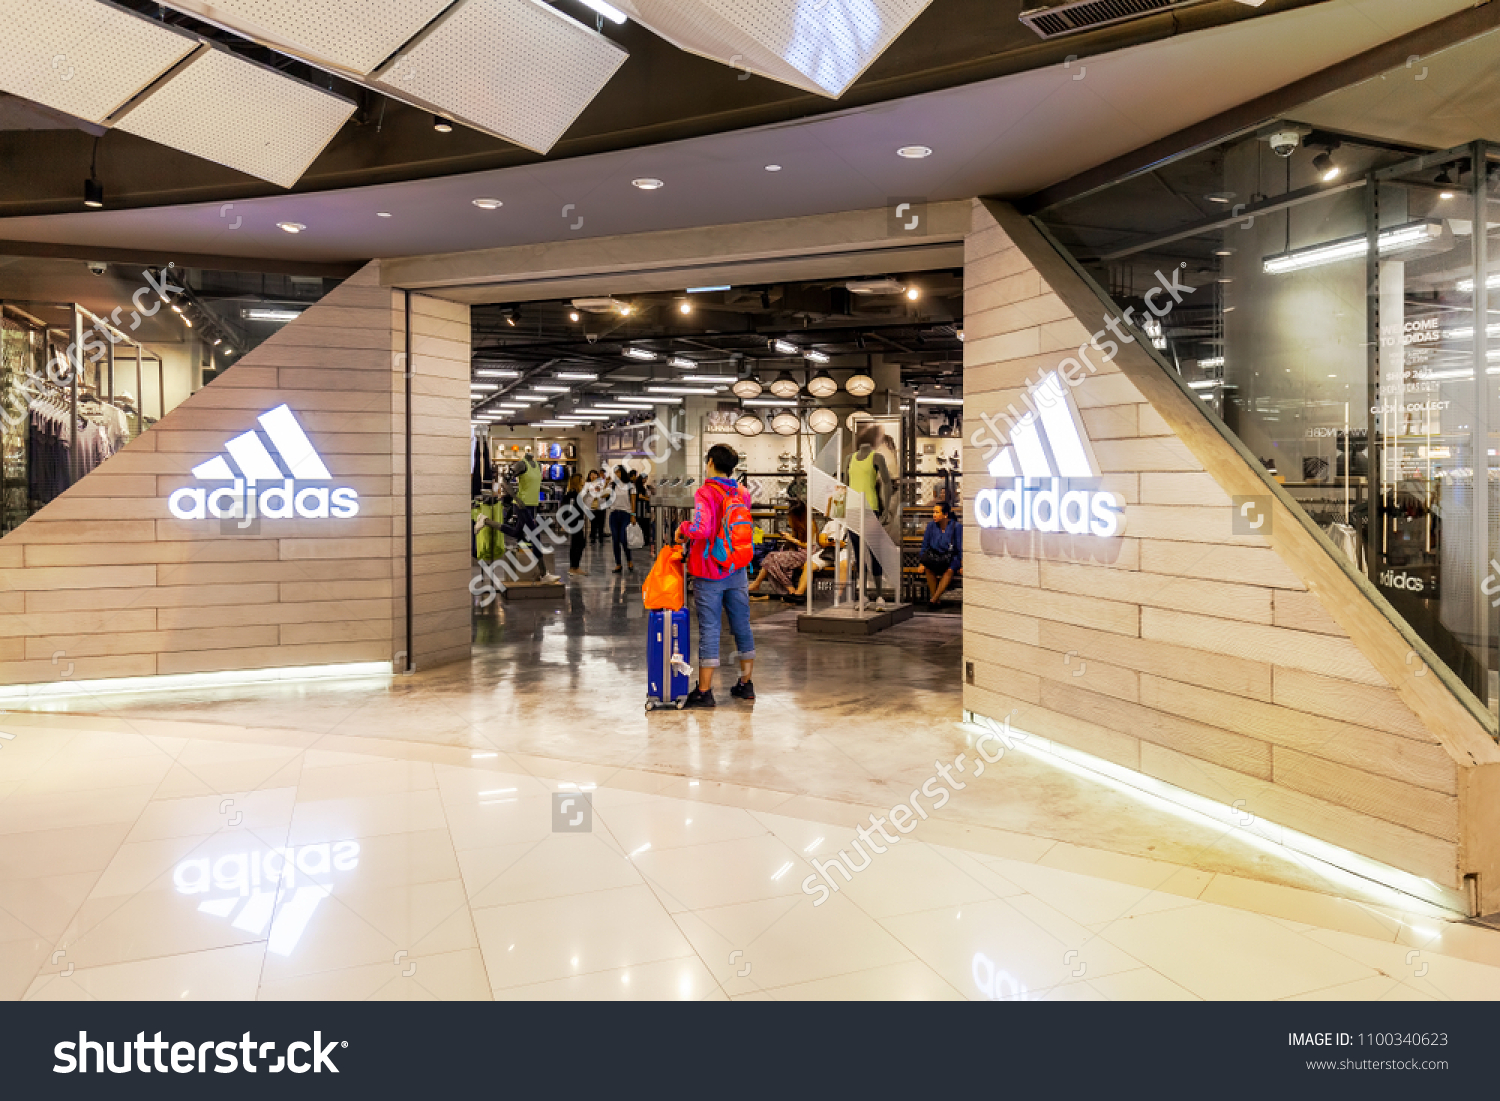 shop adidas central world